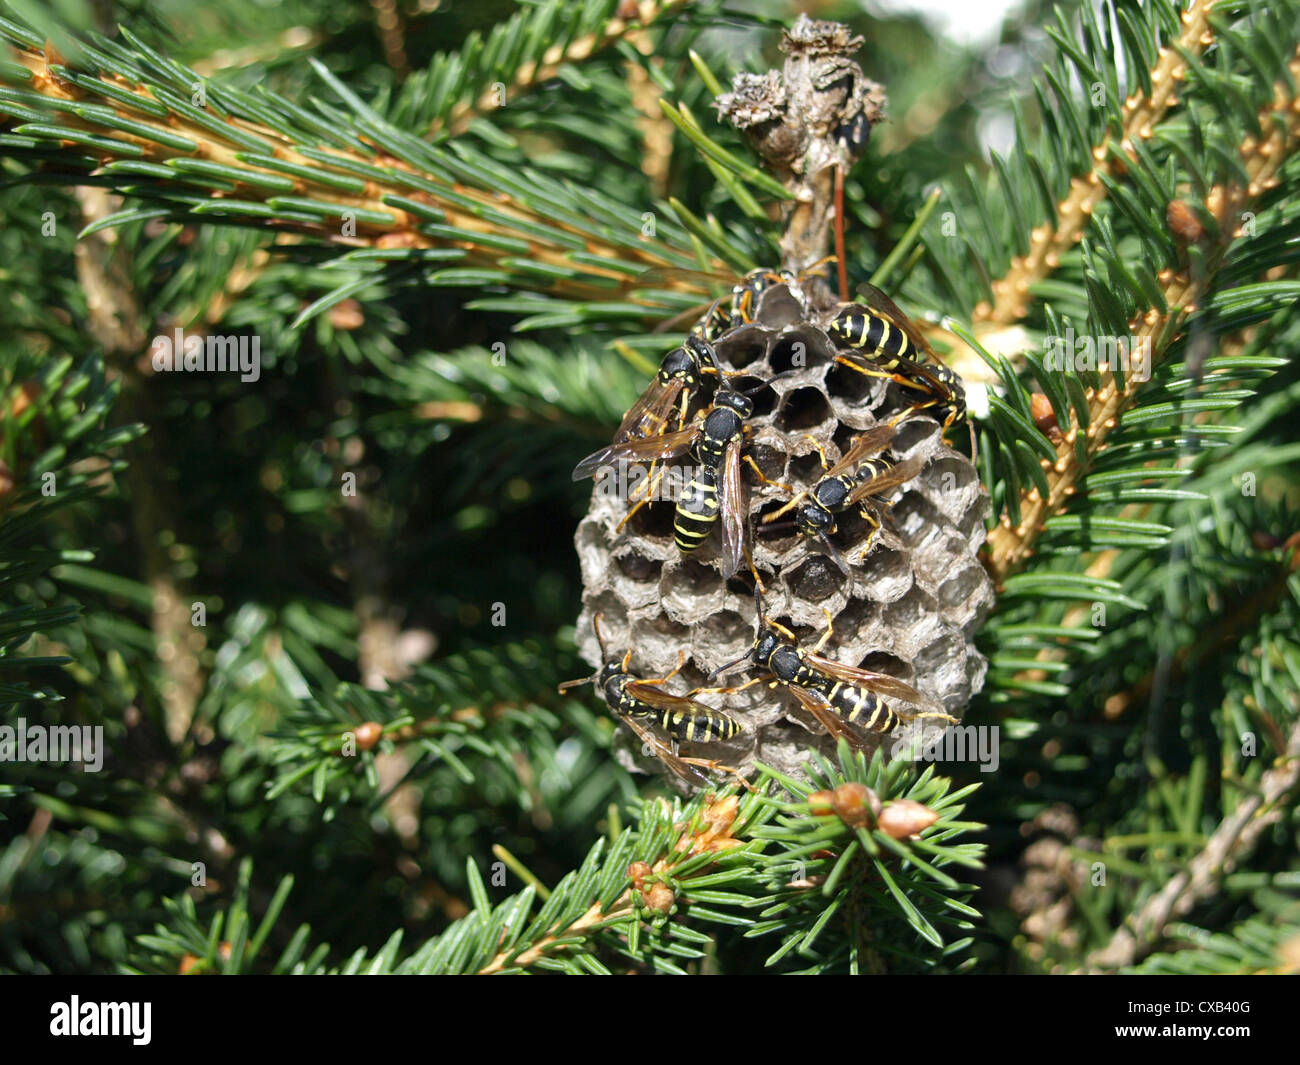 eusocial wasps with nest / Feldwespen mit Nest Stock Photo